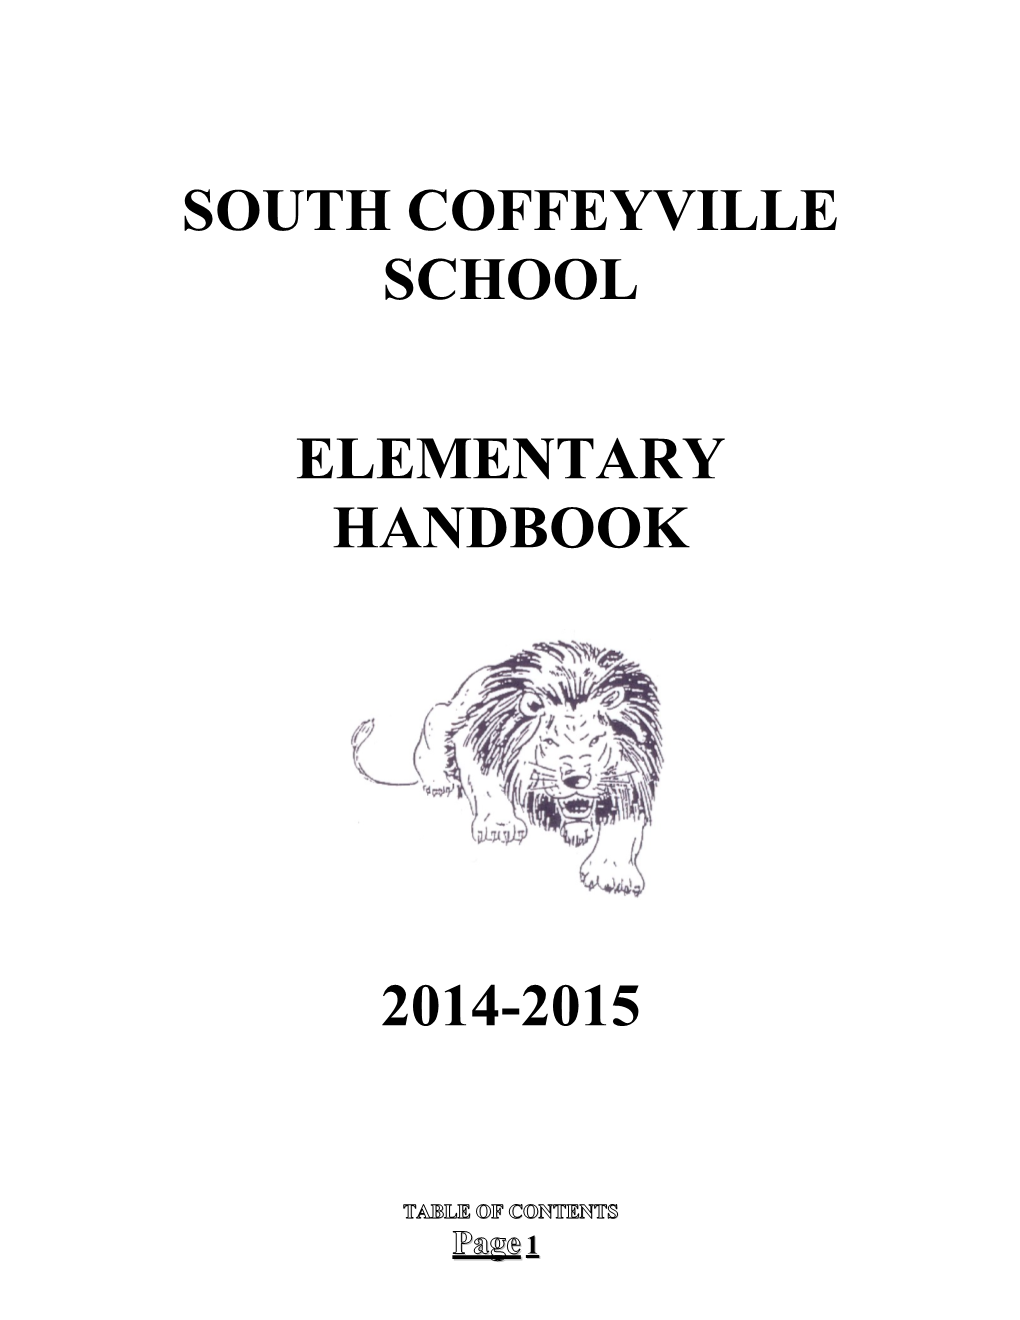 Philosophy of South Coffeyville School